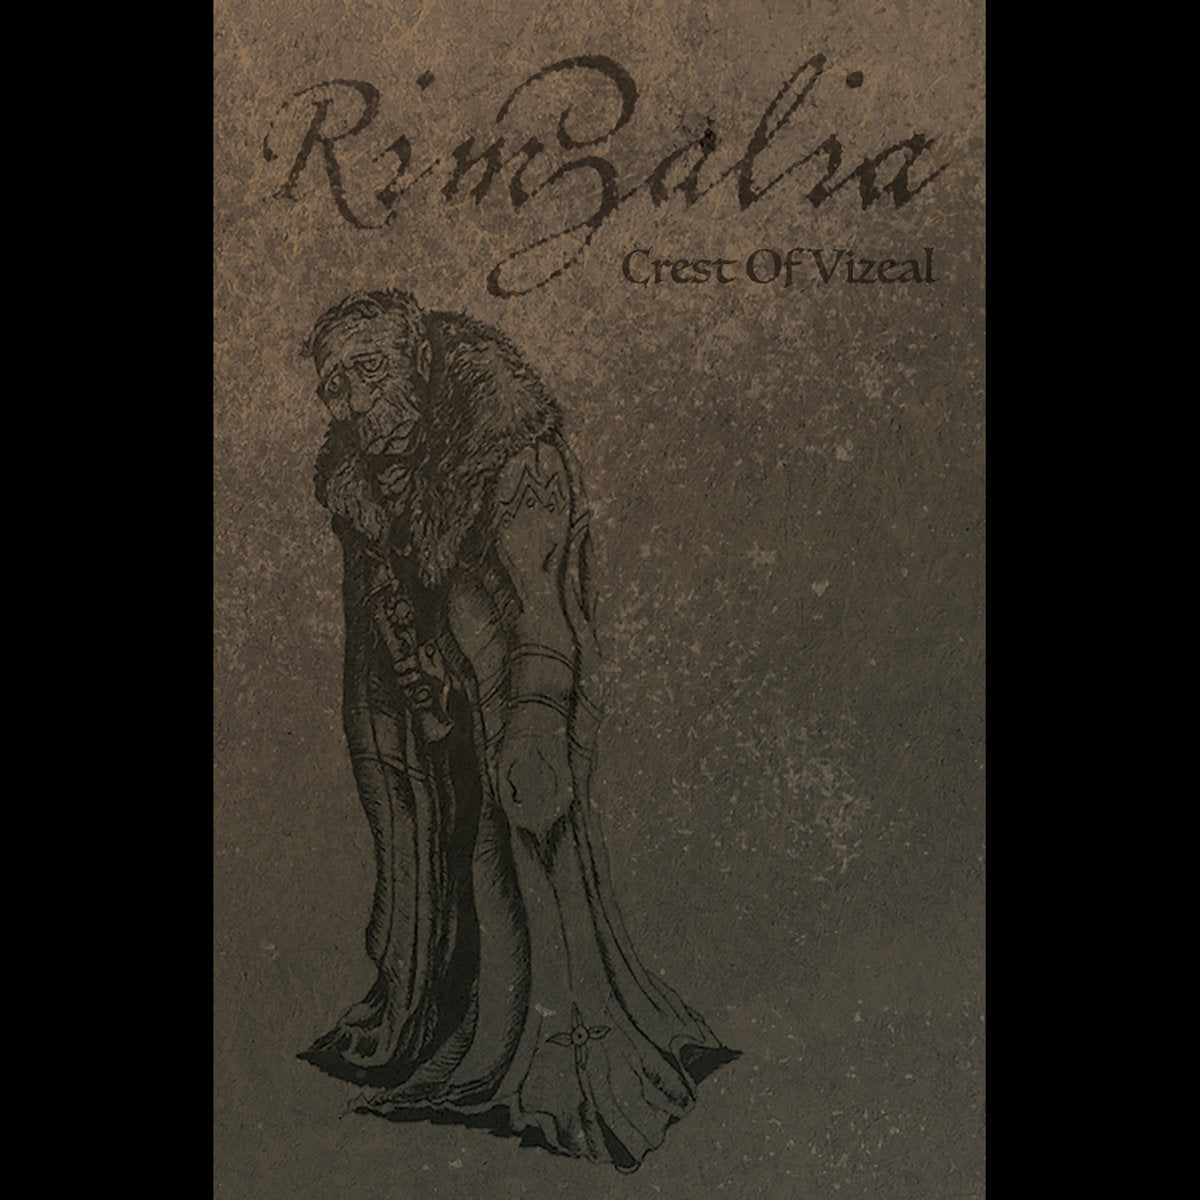 [SOLD OUT] RIMZALIA "Crest Of Vizeal" Cassette Tape